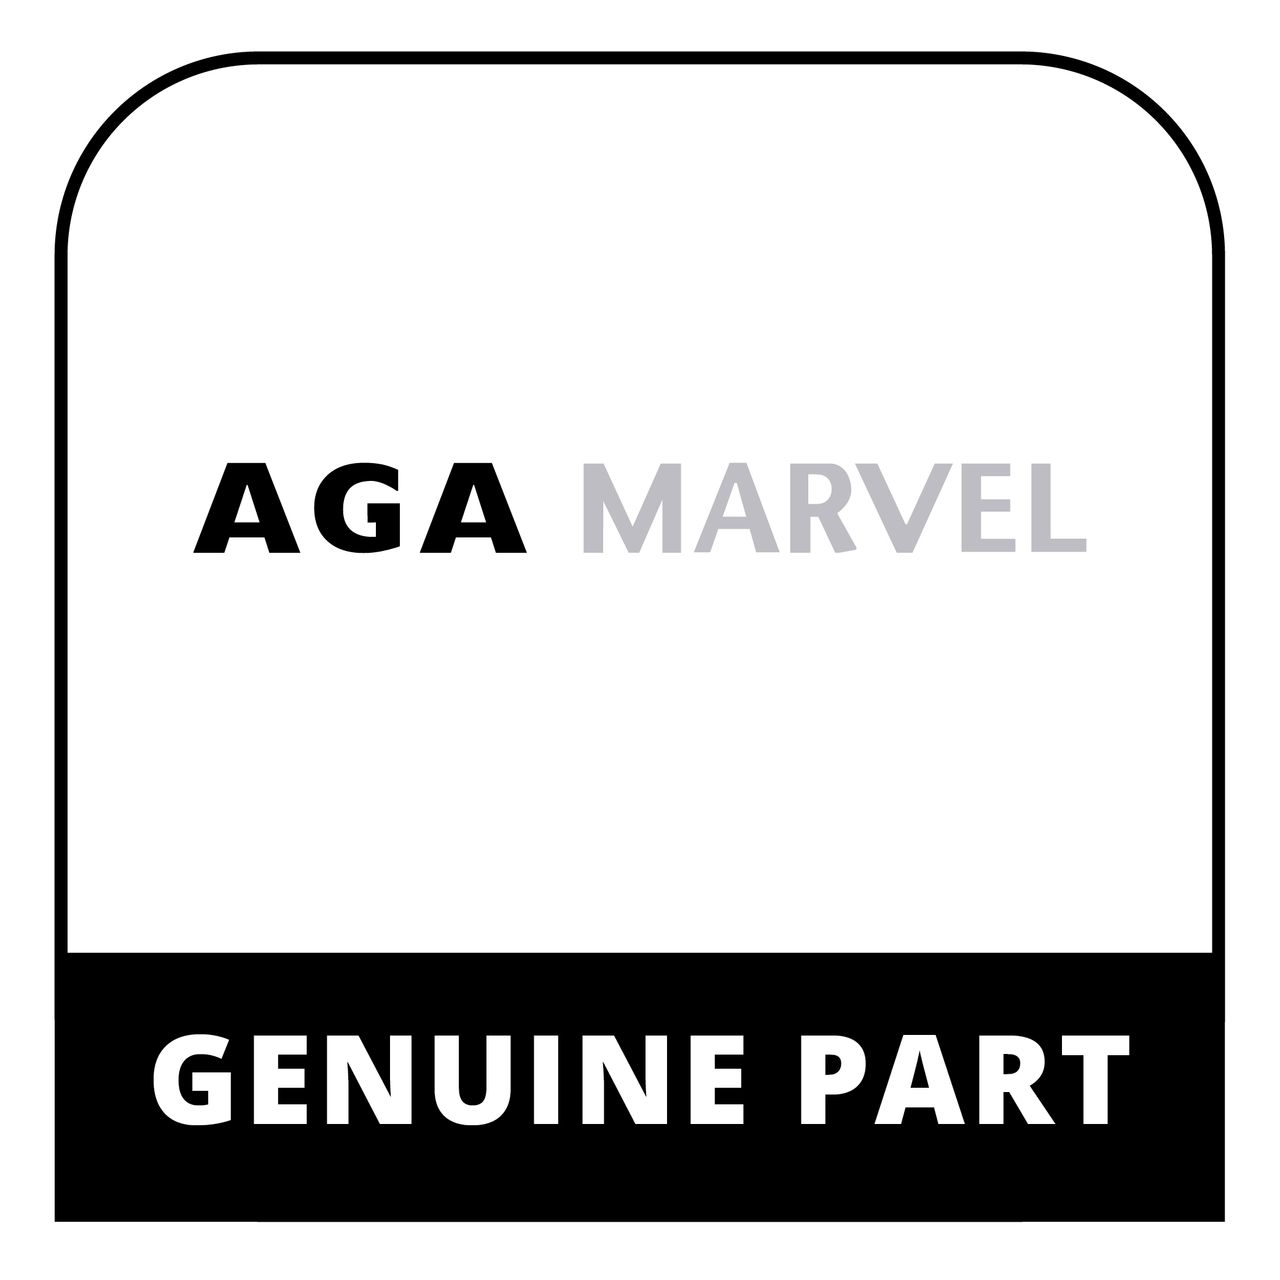 AGA Marvel RG2M341472 - Bracket-Reset Switch P/F Ray - Genuine AGA Marvel Part